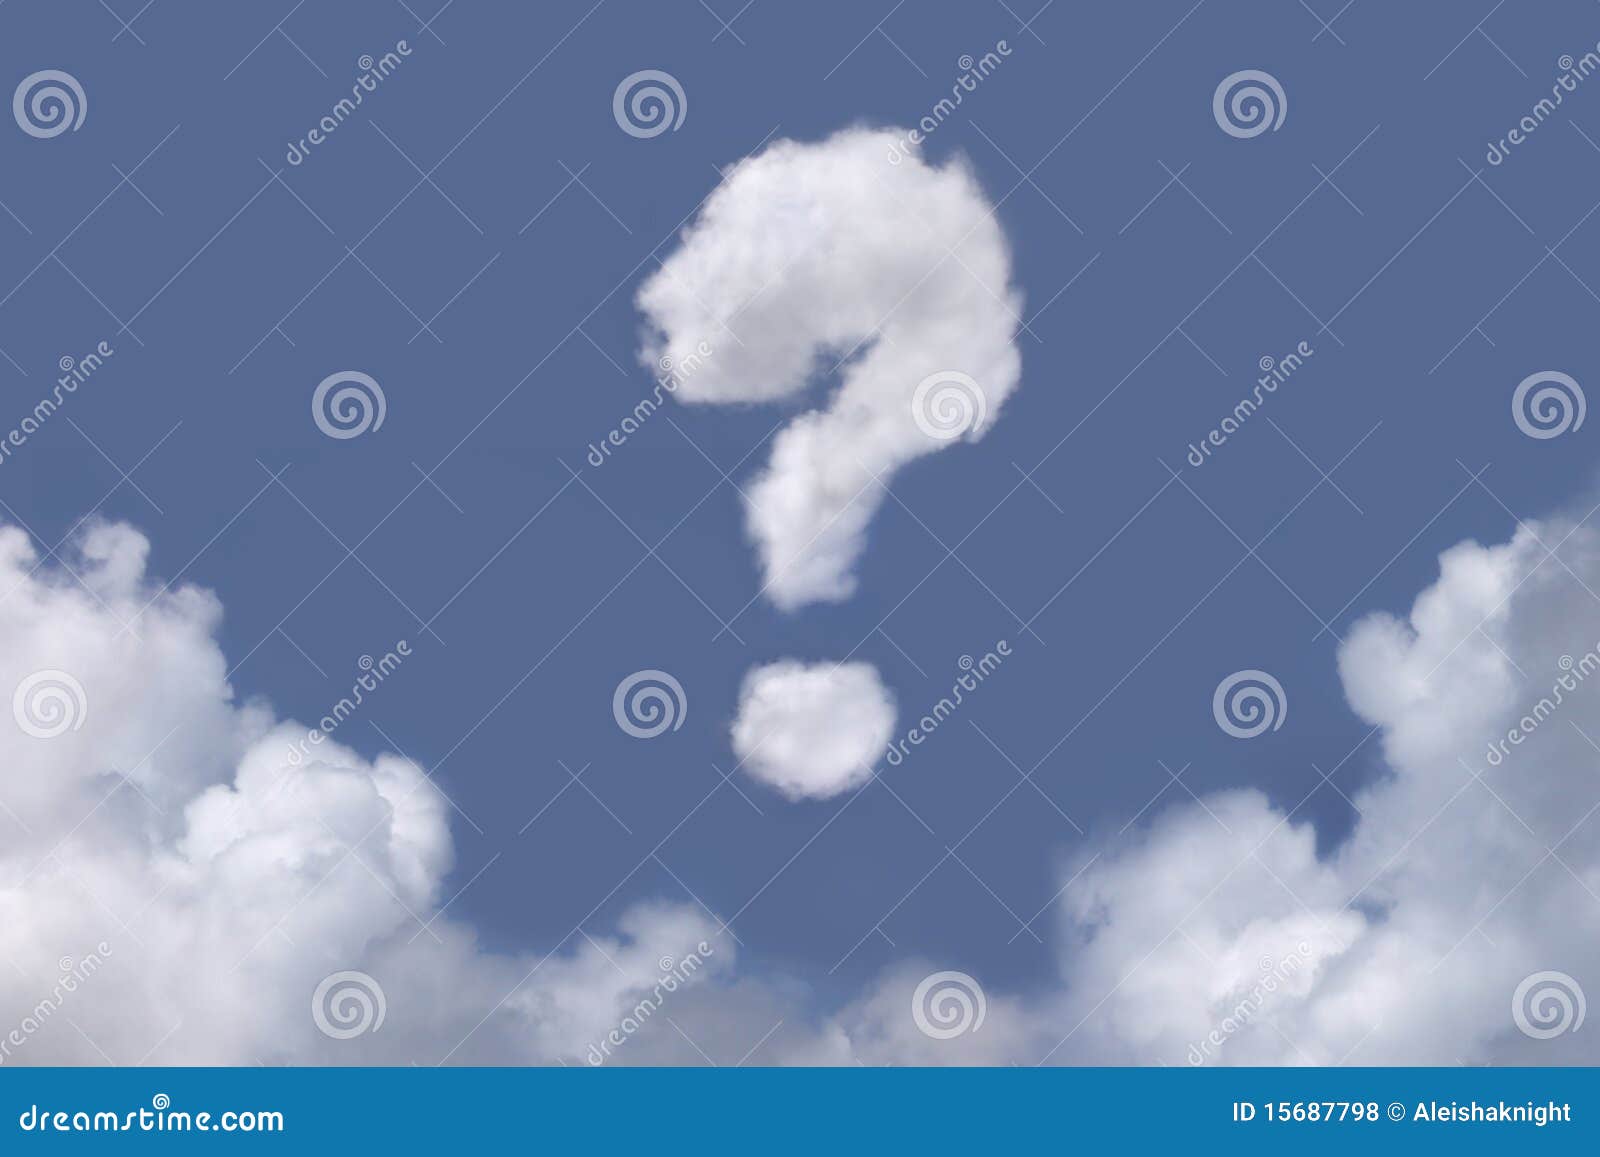 question mark cloud